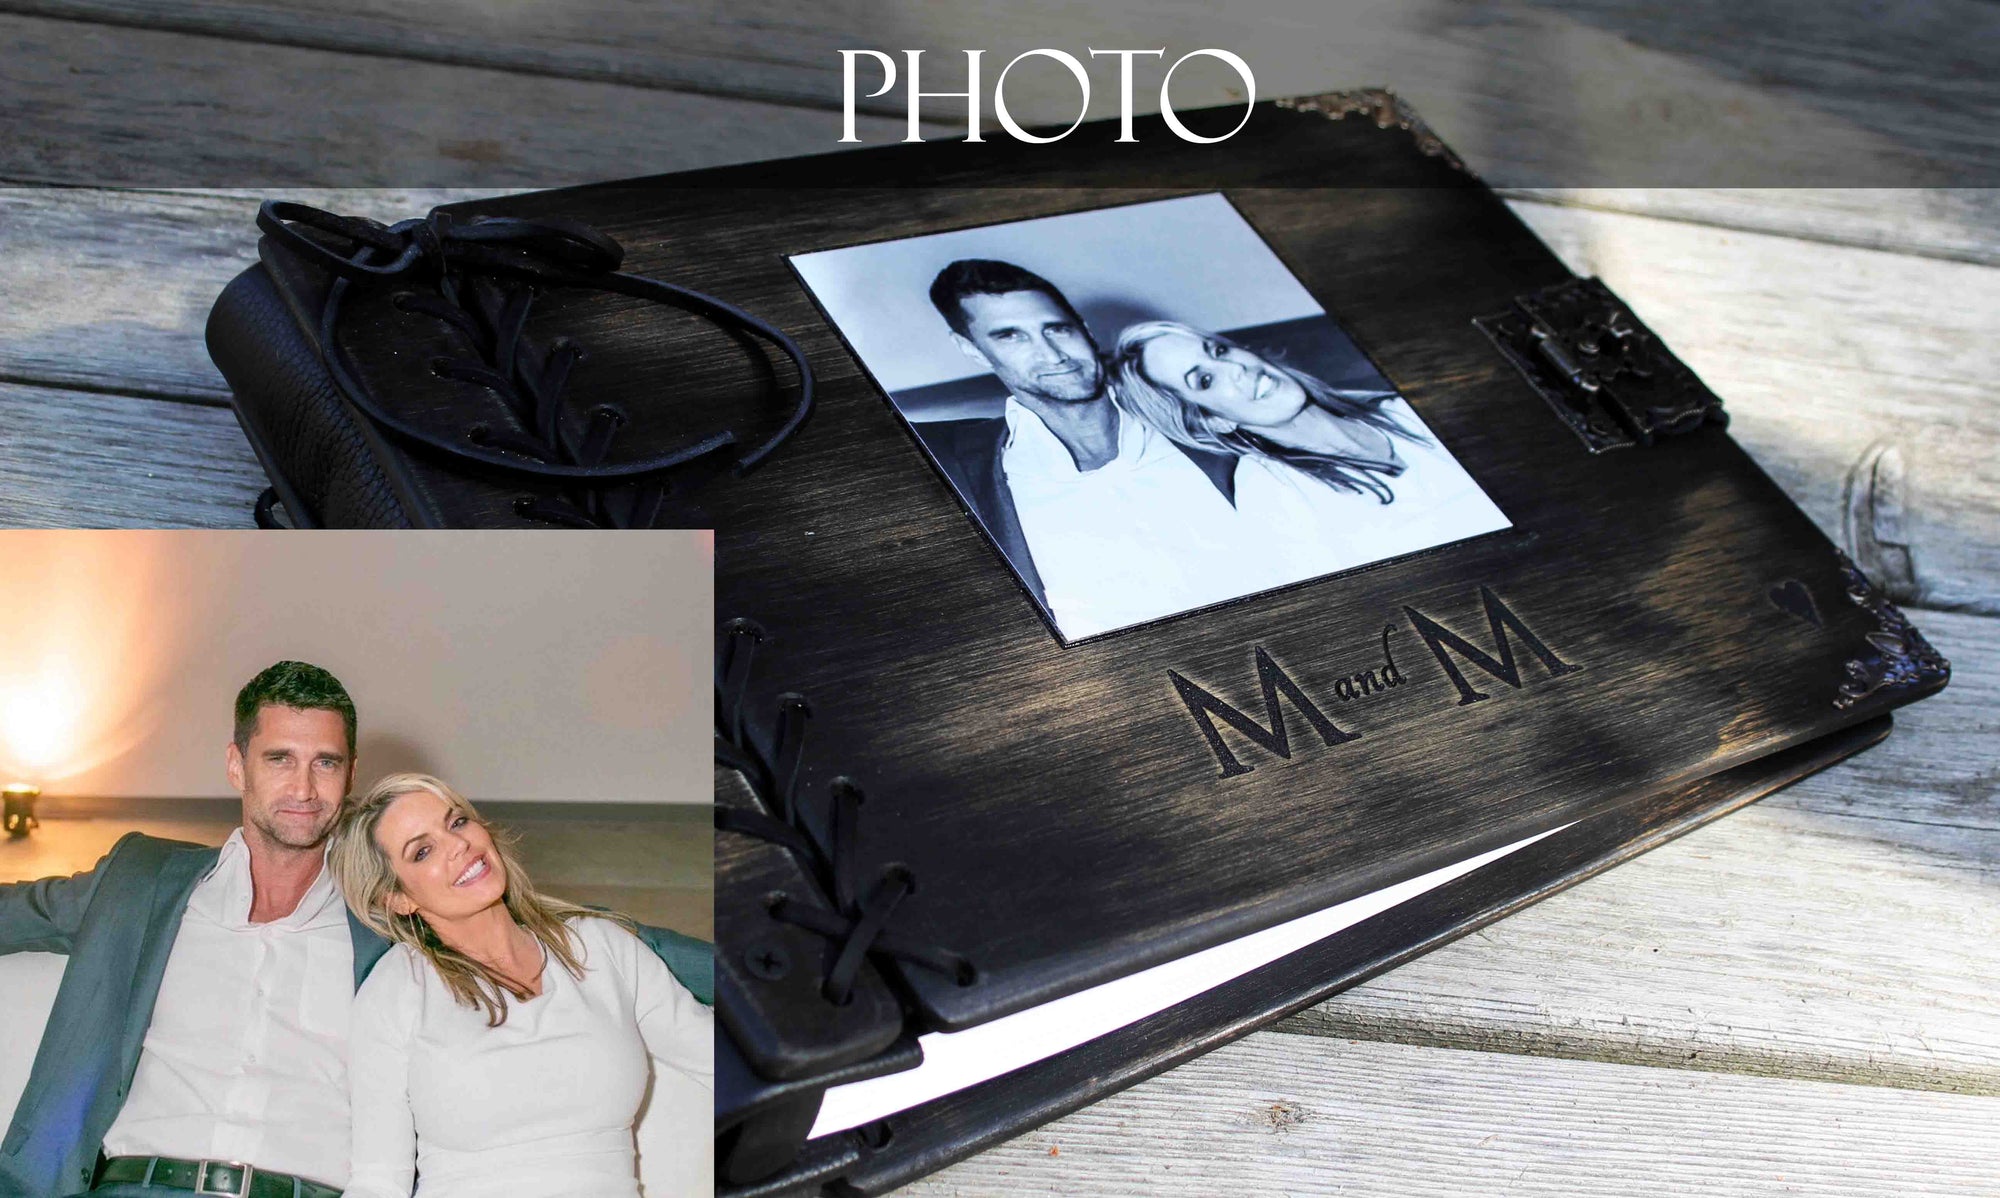 Add A Custom Engraving or Photo - Rustic Engravings Photo Album Fifth Wedding Anniversary Gift